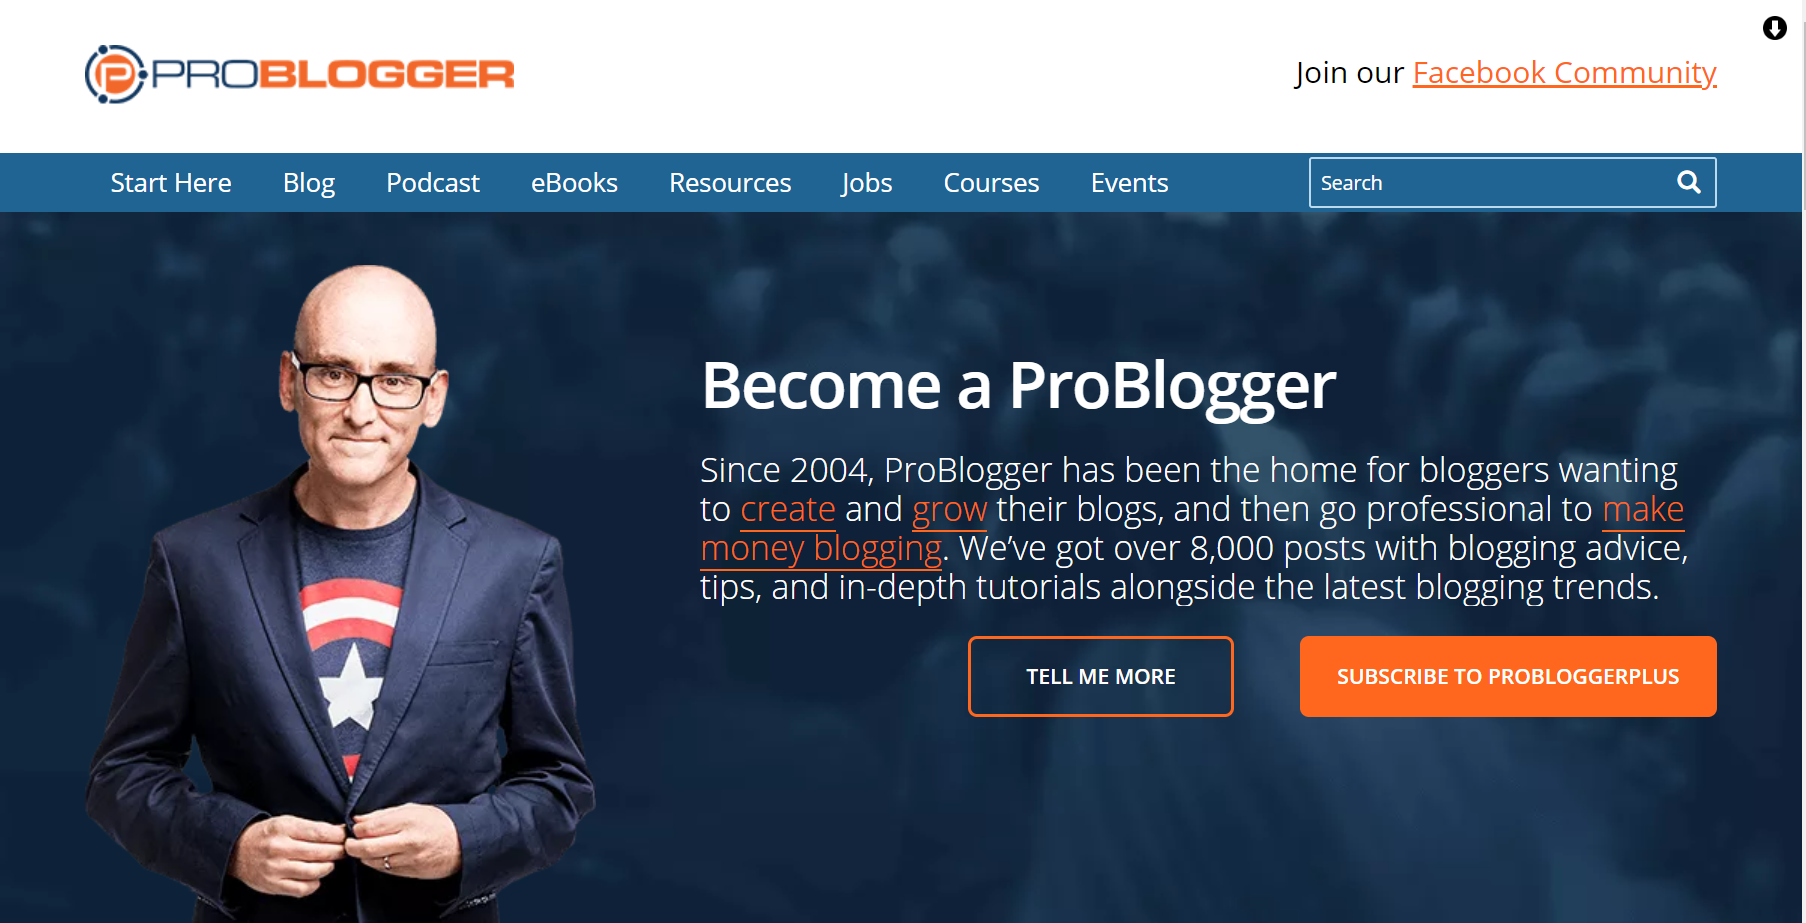 blogger job search